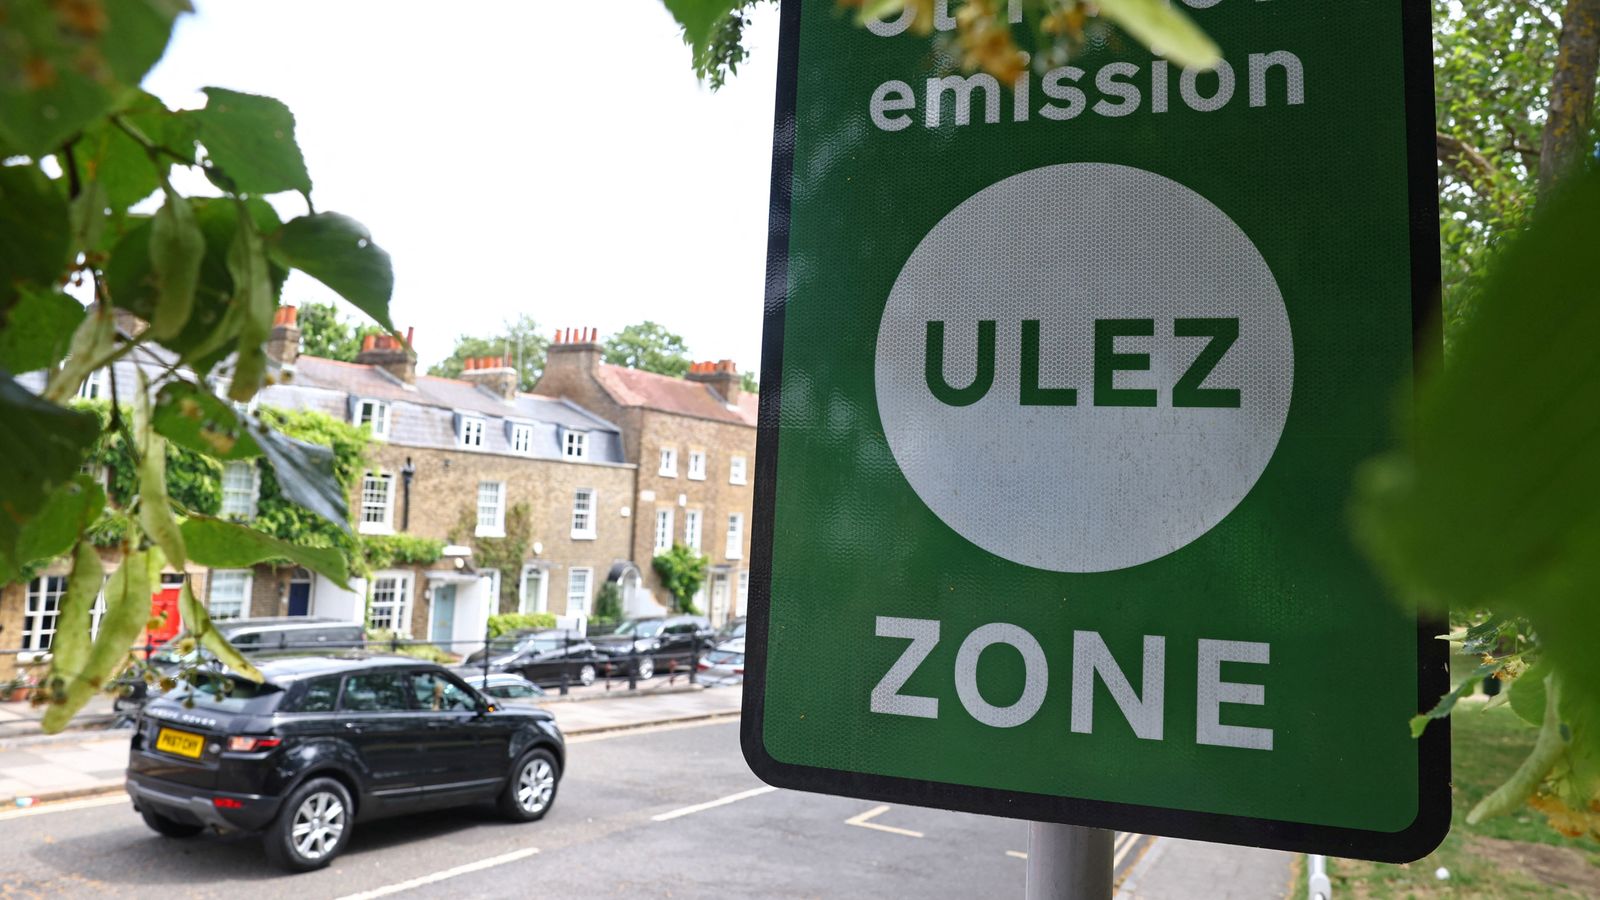 London mayor Sadiq Khan's office accused of 'alarmingly cosy relationship' to 'silence' ULEZ criticism